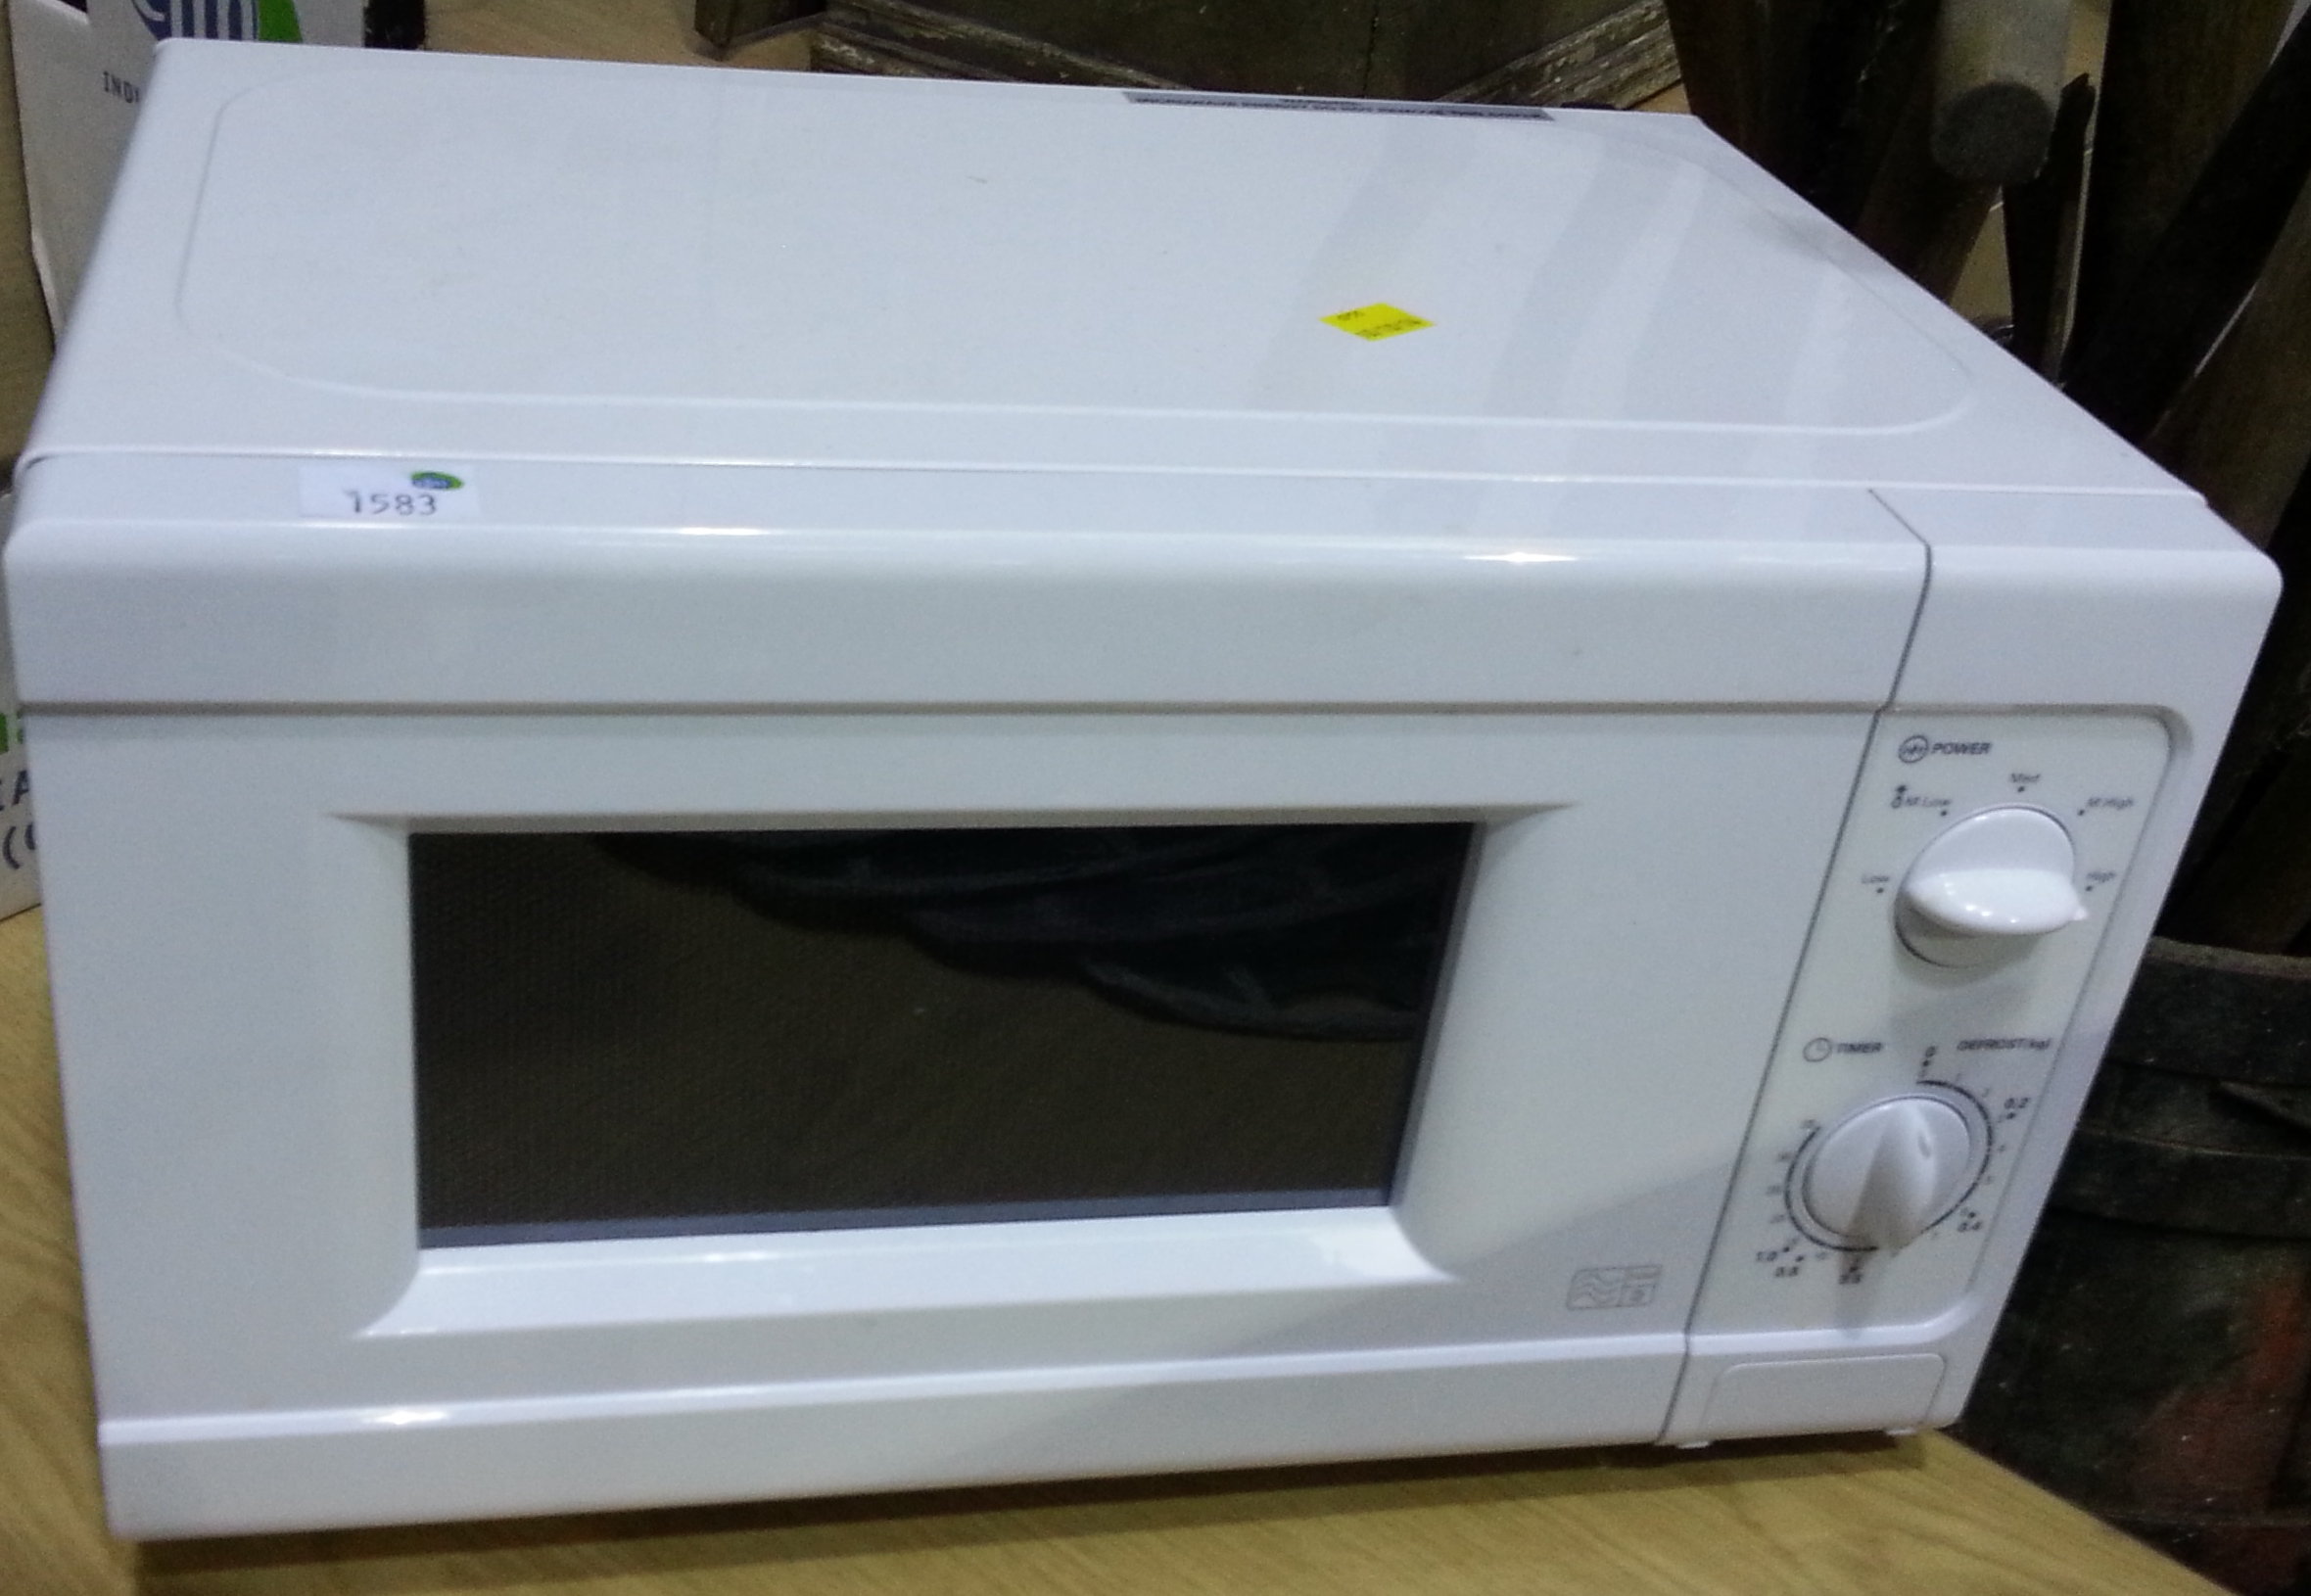 "Click here to bid.  Argos 700w Microwave Oven (est. £20-£30)"